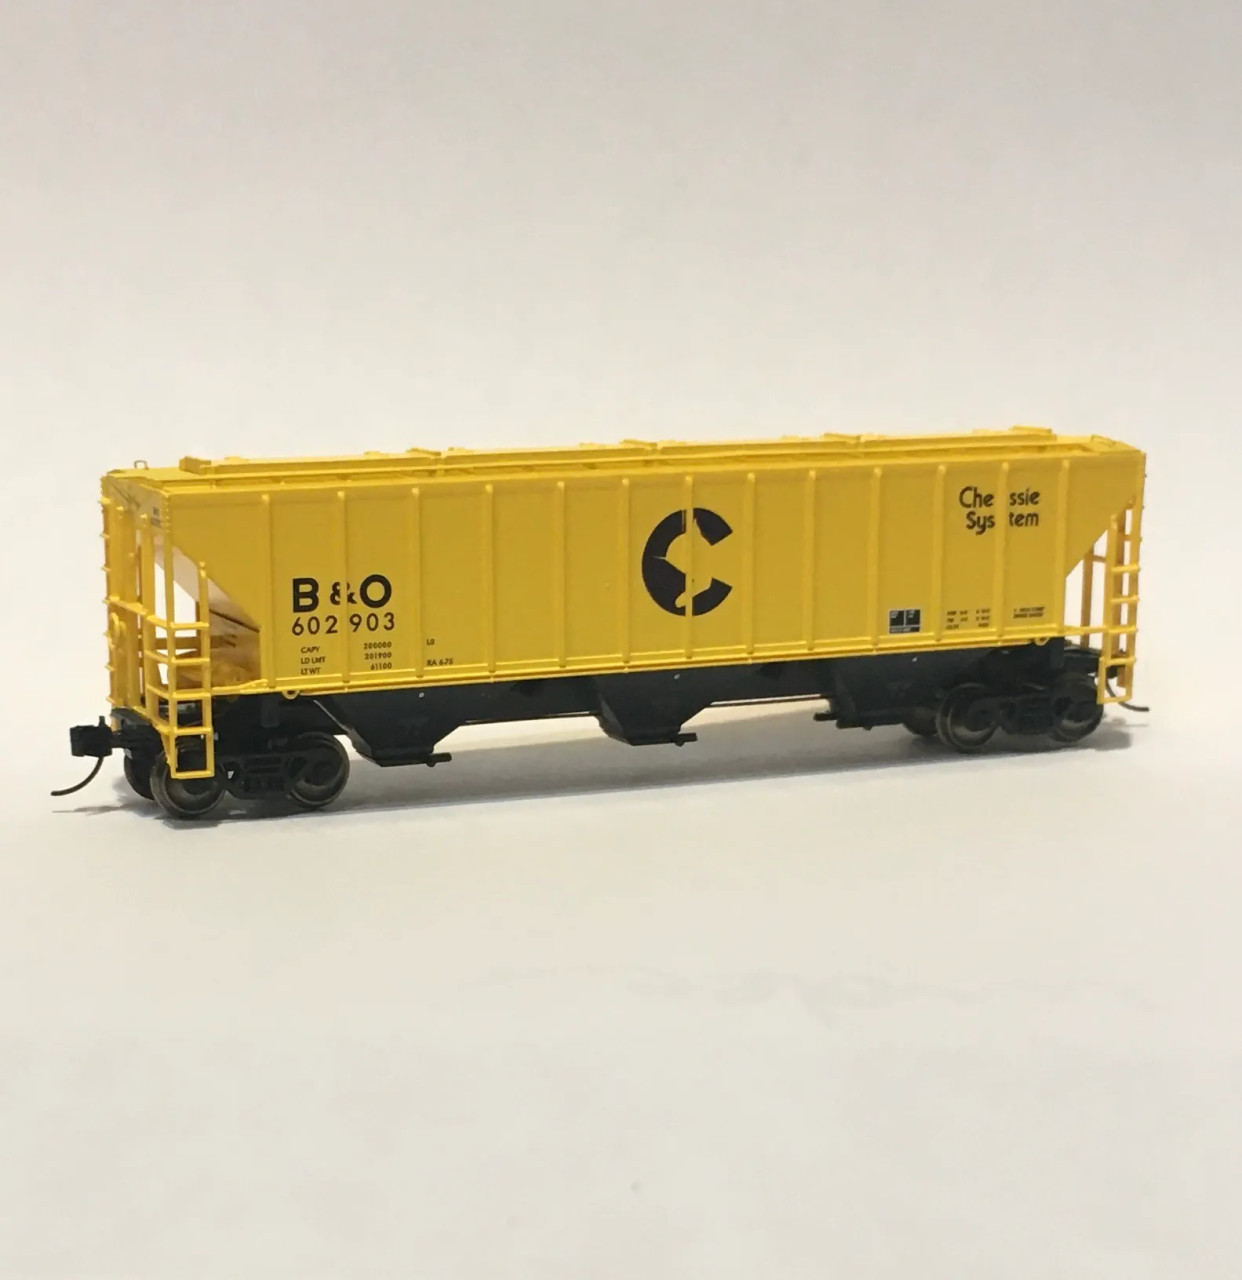 Trainworx 24430-03 N Pullman-Standard PS 4427 Covered Hopper - Chessie B&O # 602914